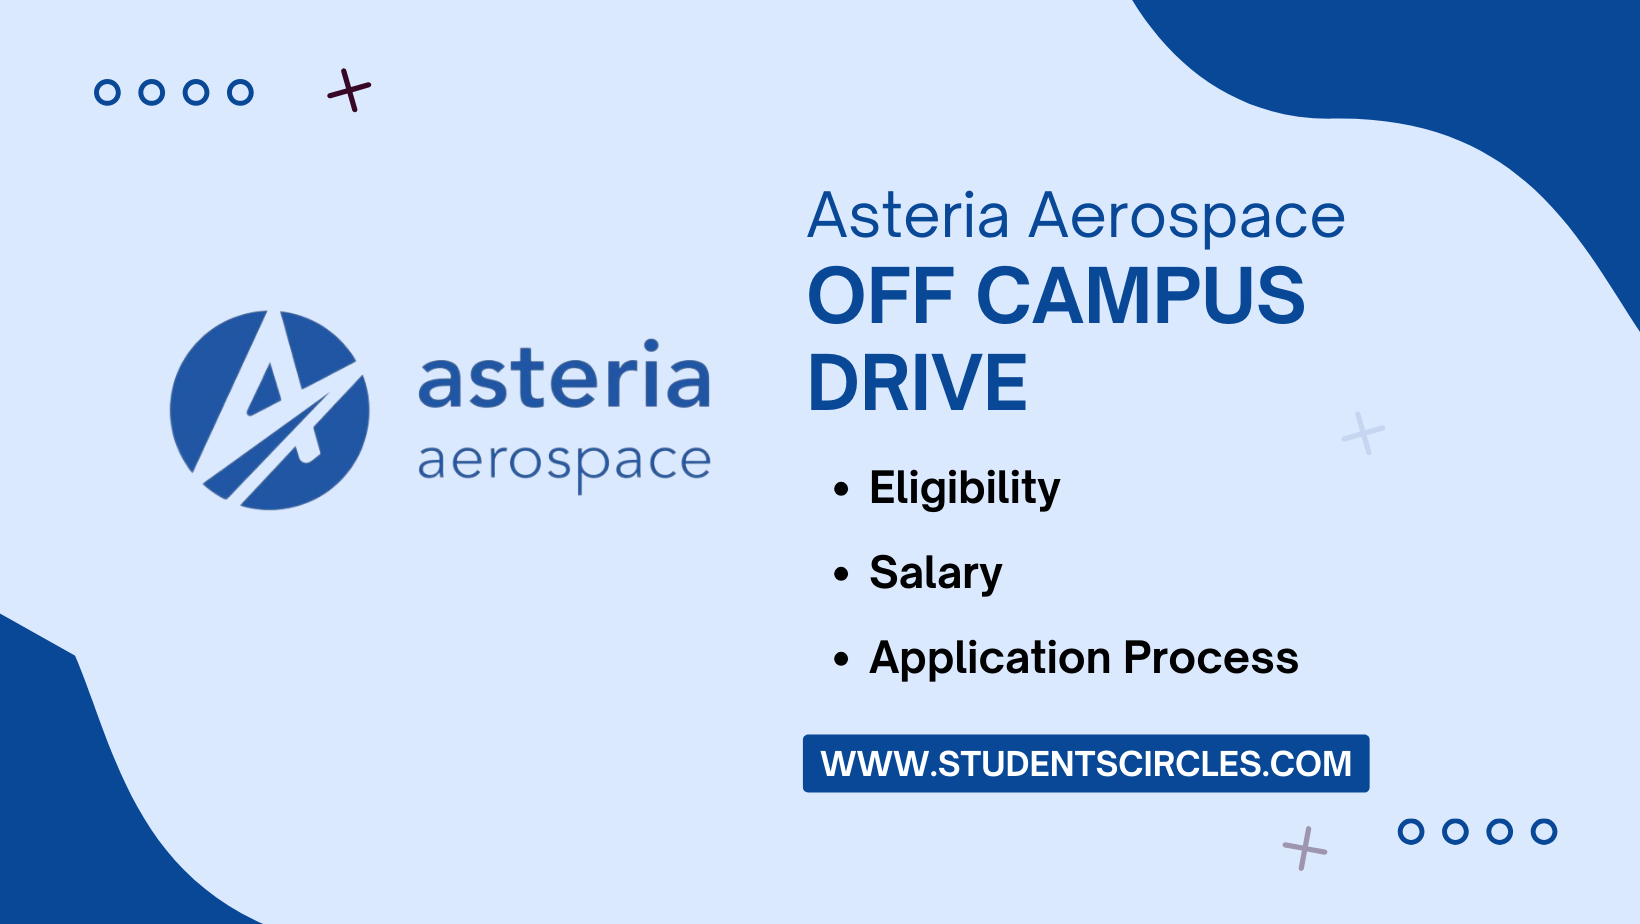 Asteria Aerospace Off Campus Drive